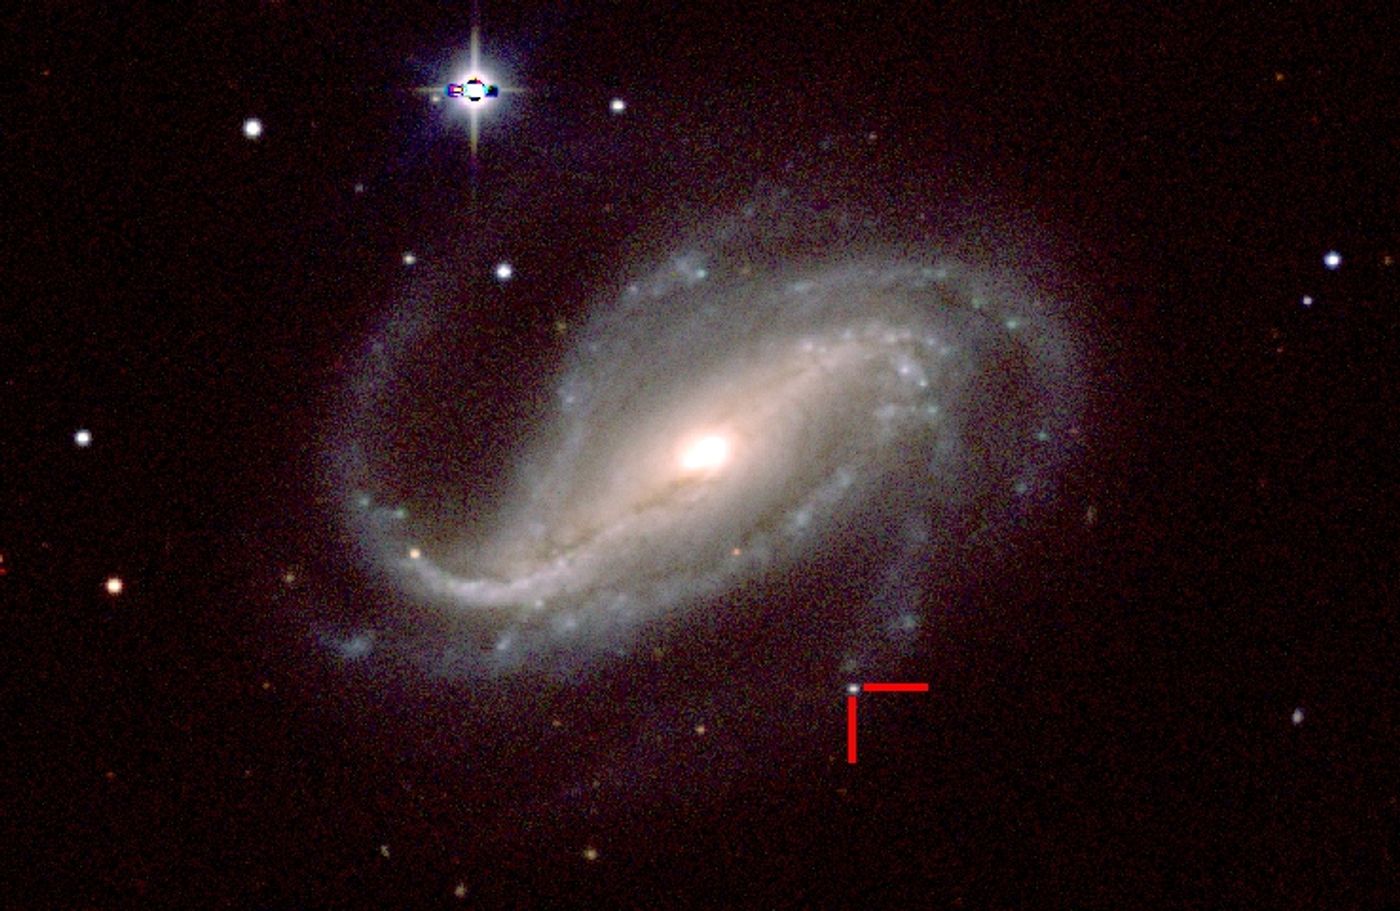 Meet, SN 2016gkg, an exploding star that went off just as an amateur astronomer began studying a distant galaxy.